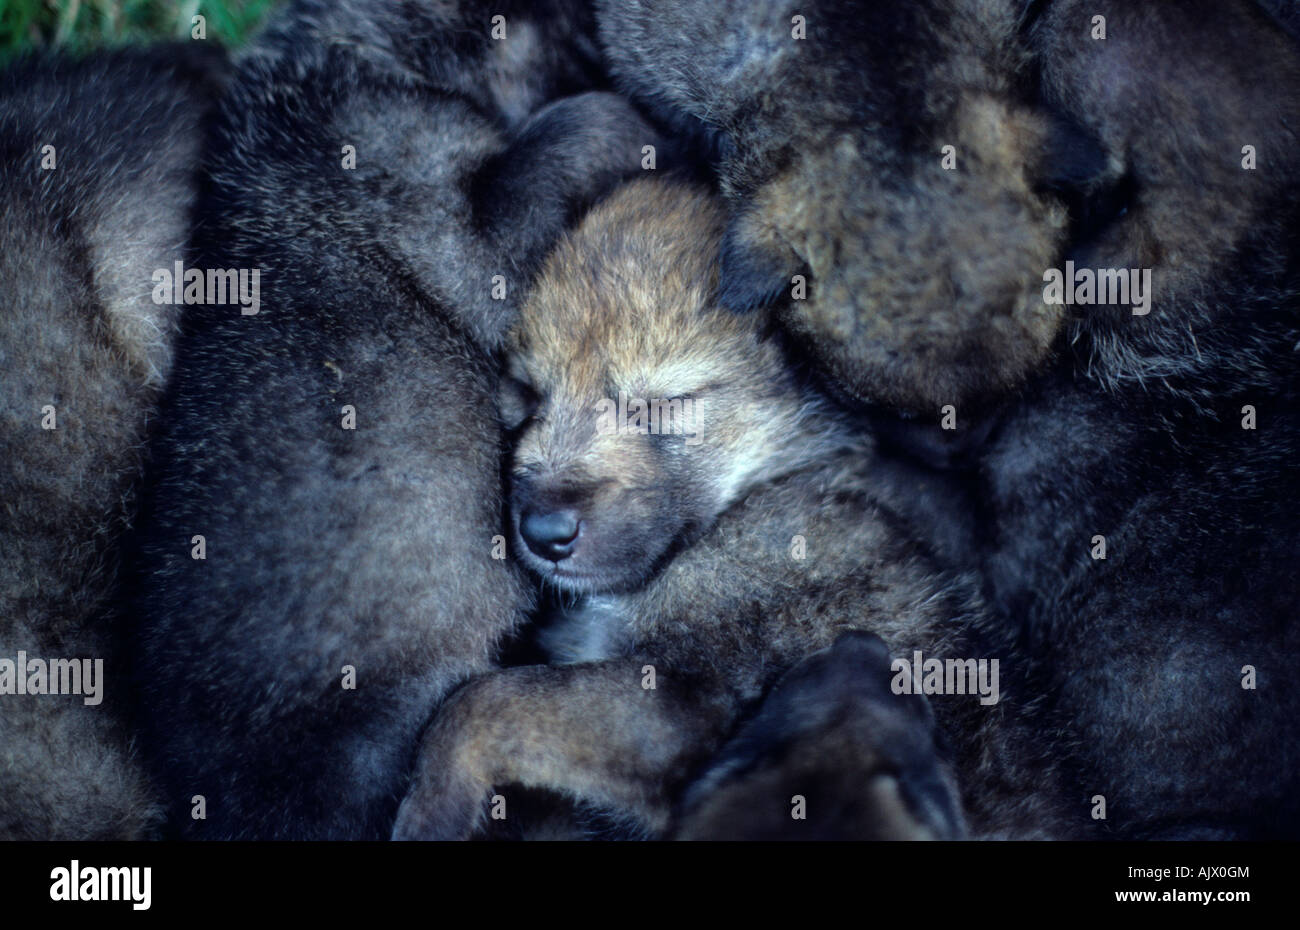 Europ Wölfe Jungtiere schlafend Bayerischer Wald Canis lupus | european wolves pups sleeping bavarian forest Canis lupus Stock Photo